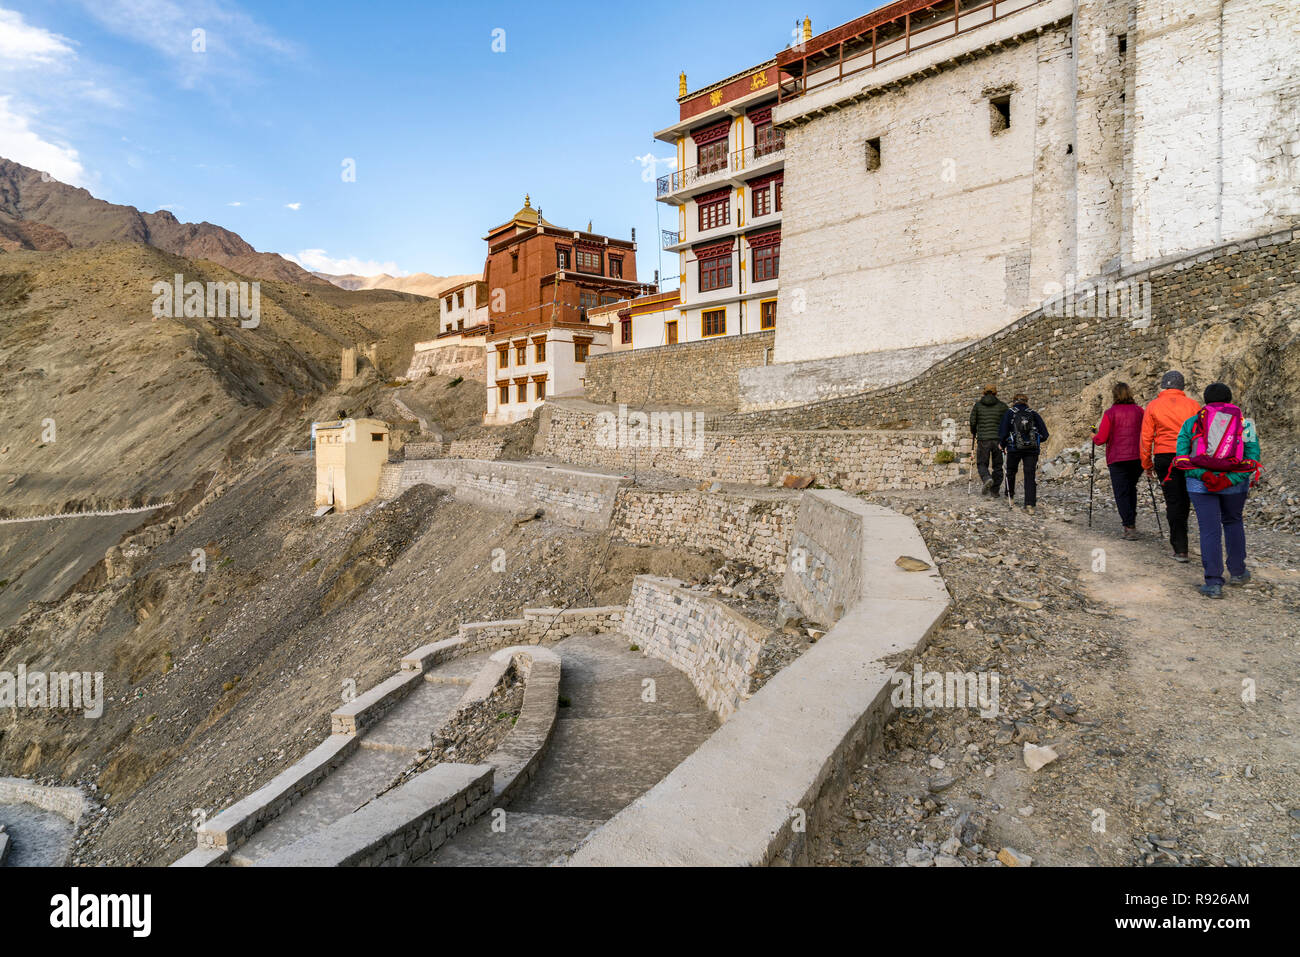 Szenen aus dem Trekking in Ladakh, Nordindien Stockfoto